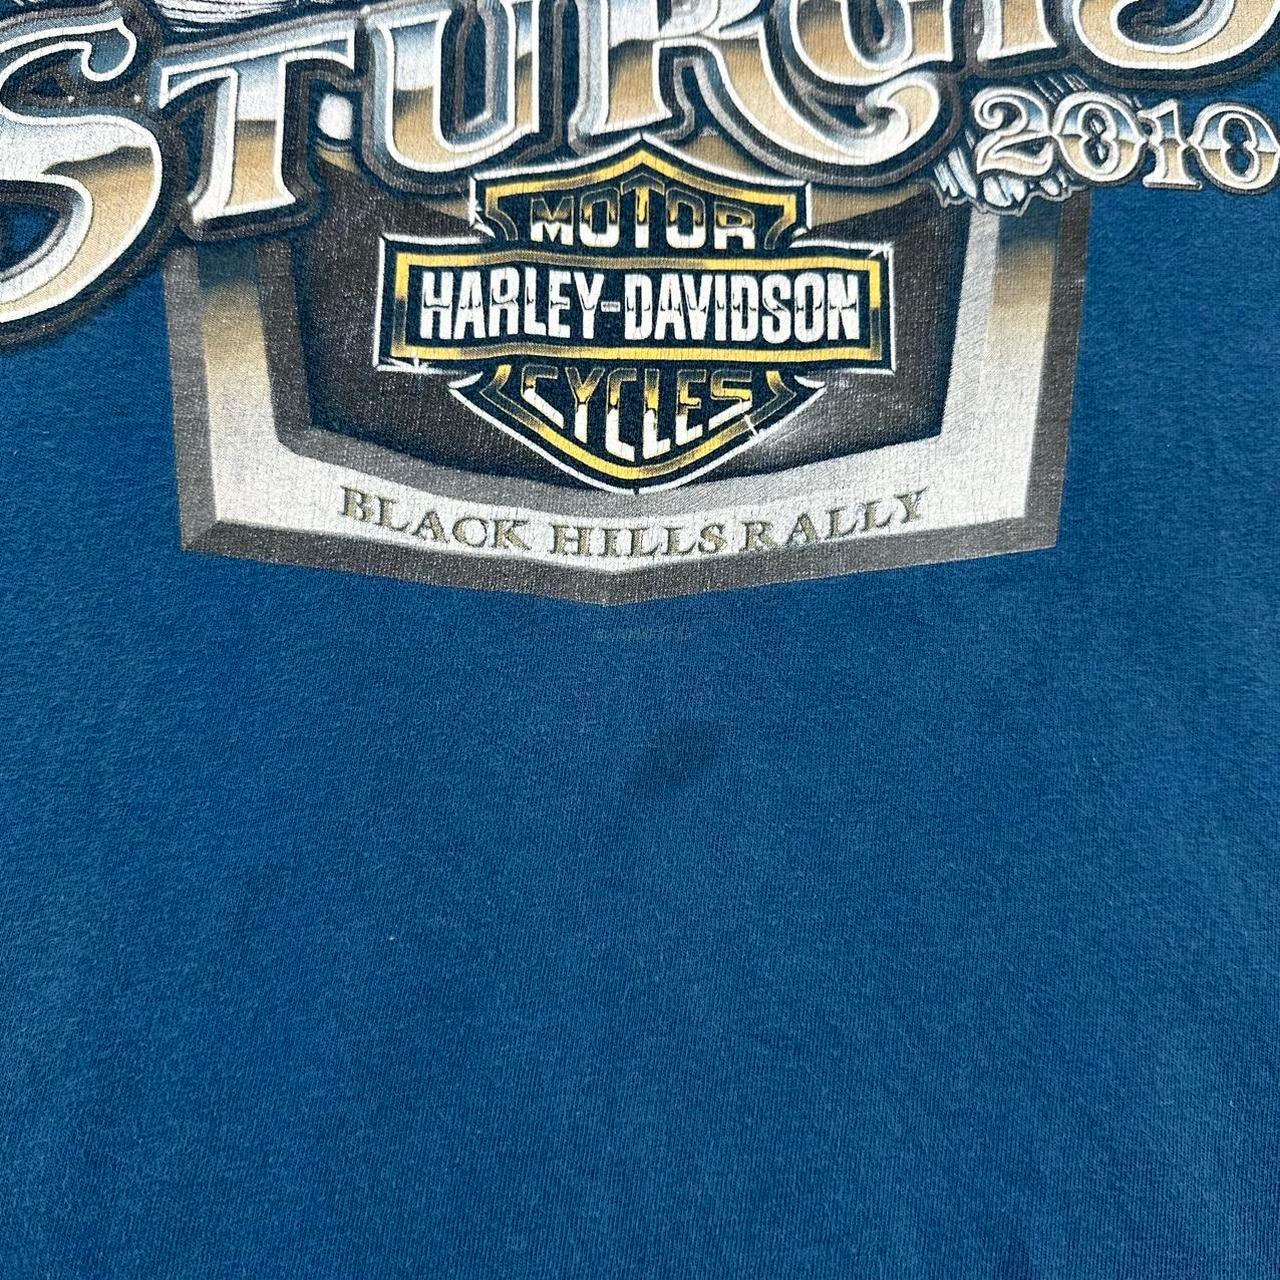 Vintage Harley Davidson T Shirt Size S - Known Source